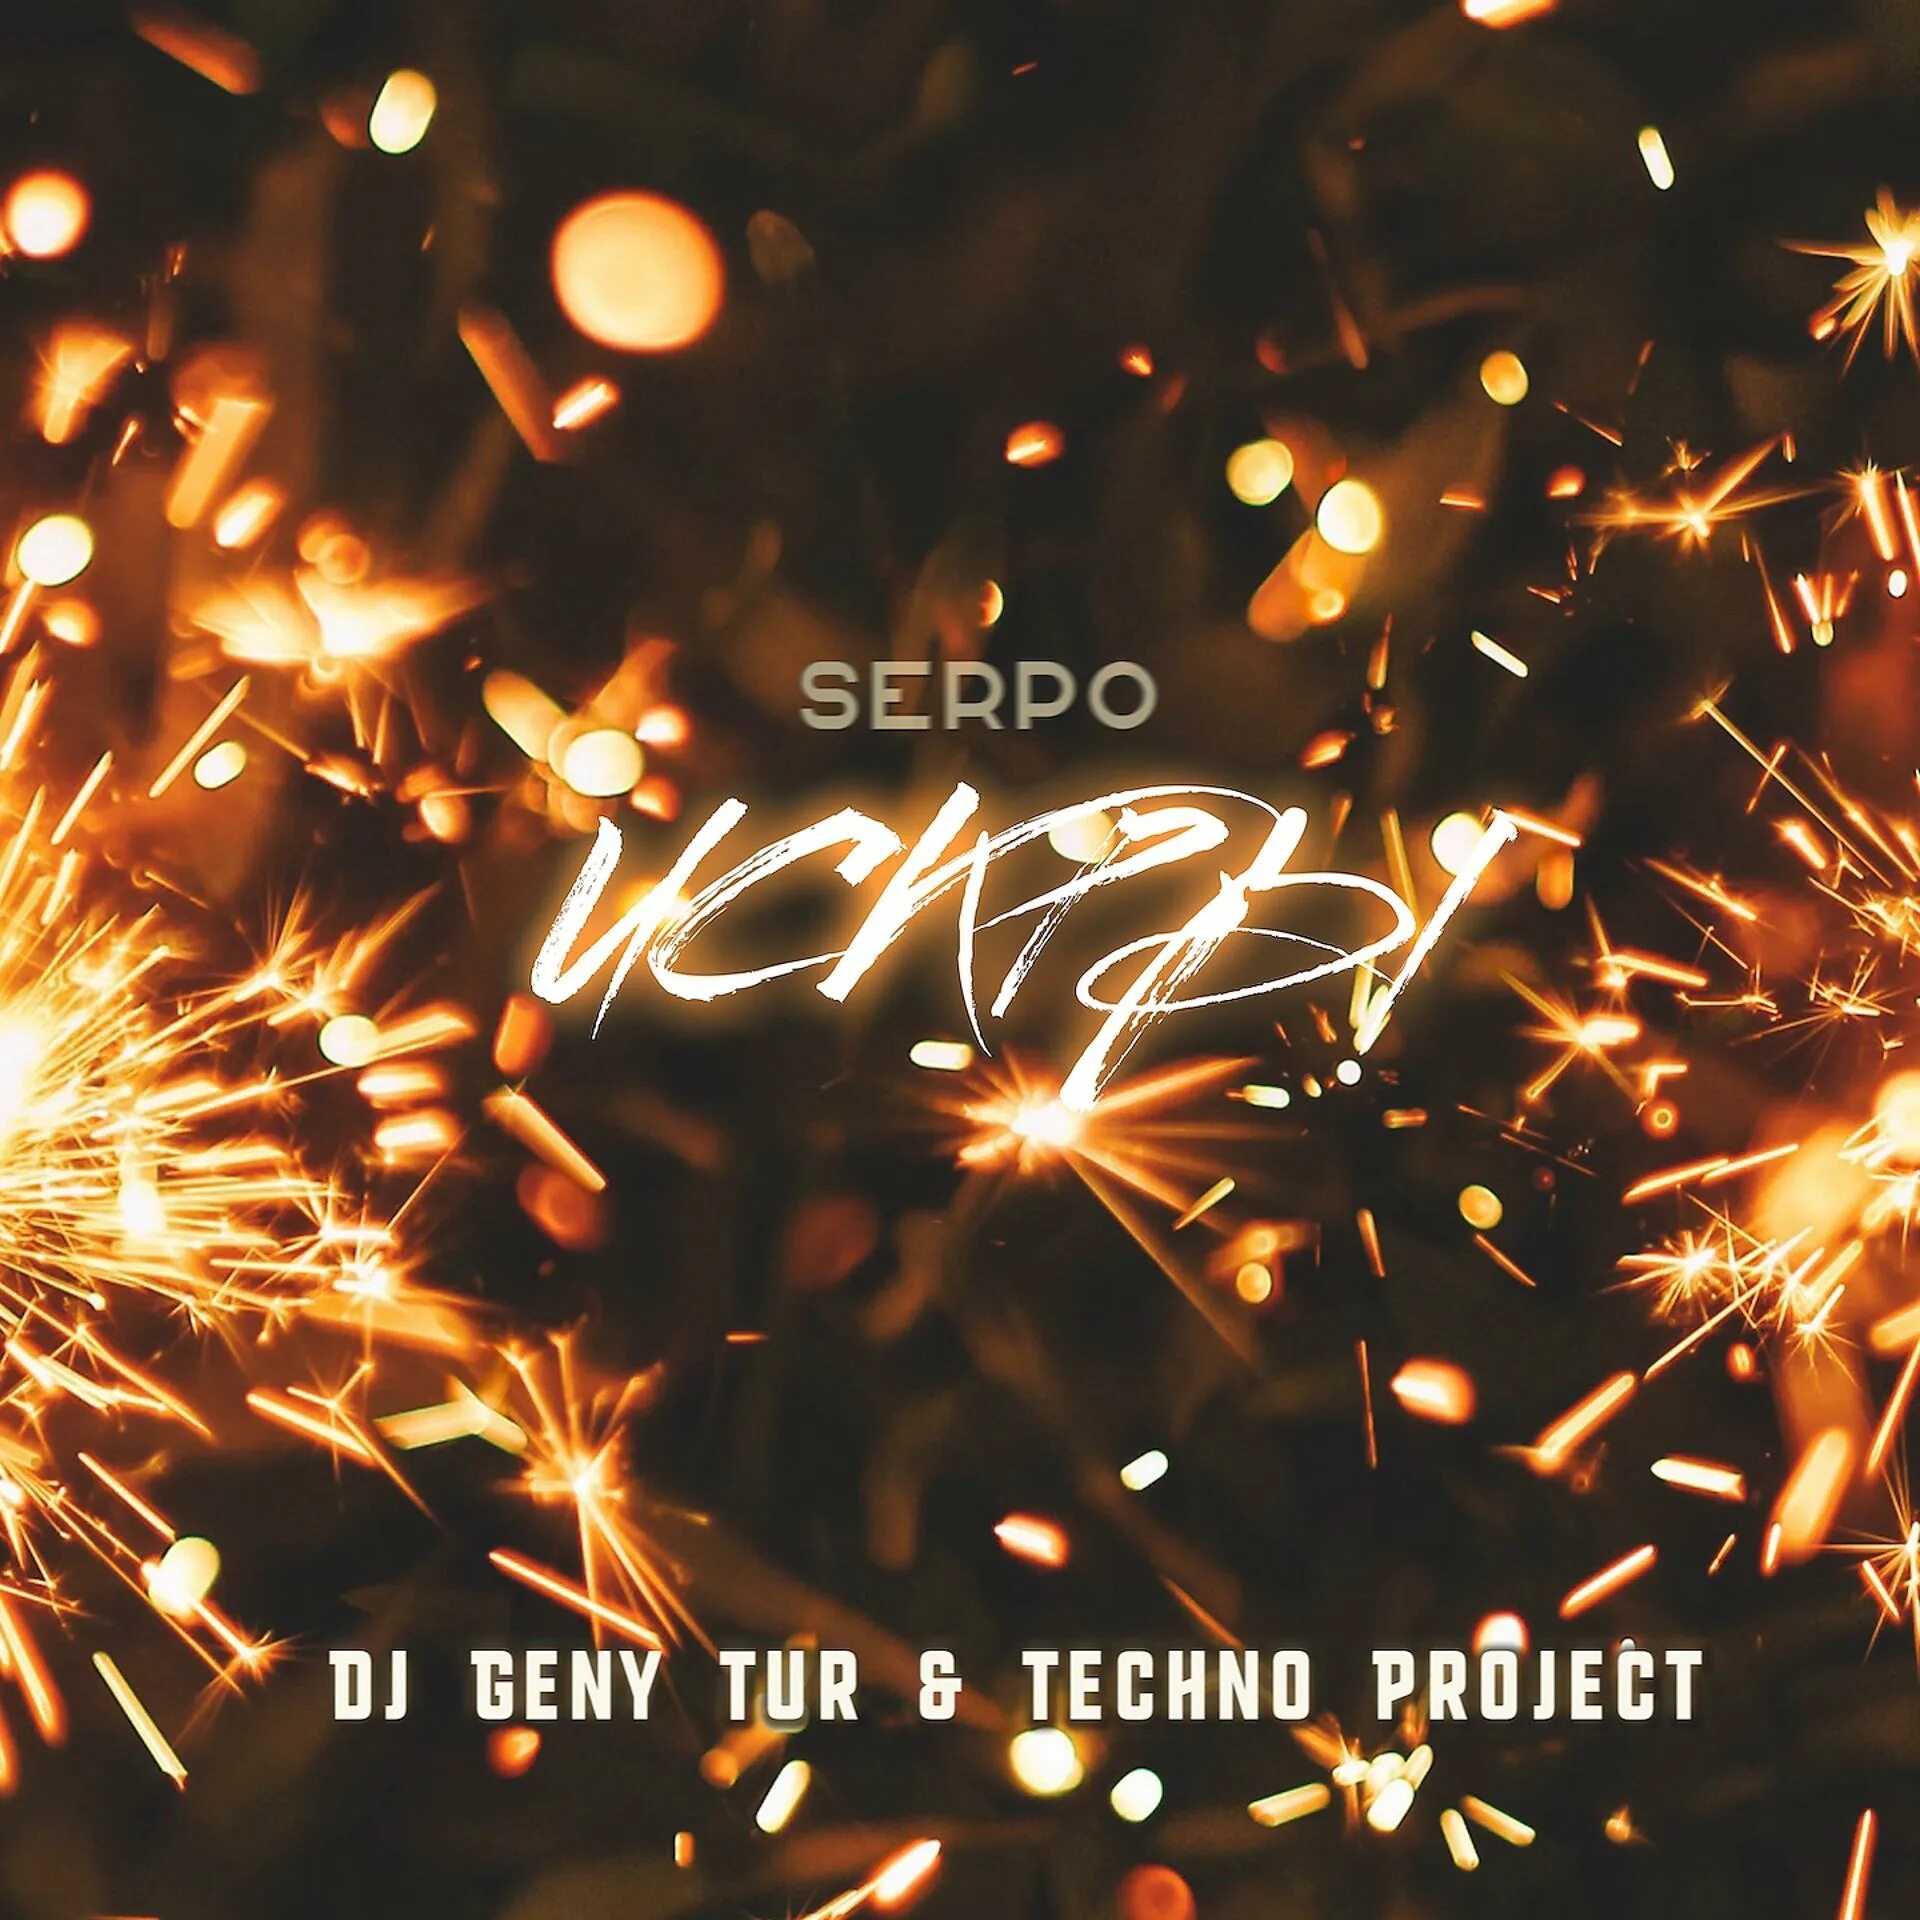 SERPO & DJ Geny Tur & Techno Project. Искры огня. Музыкальные искры.